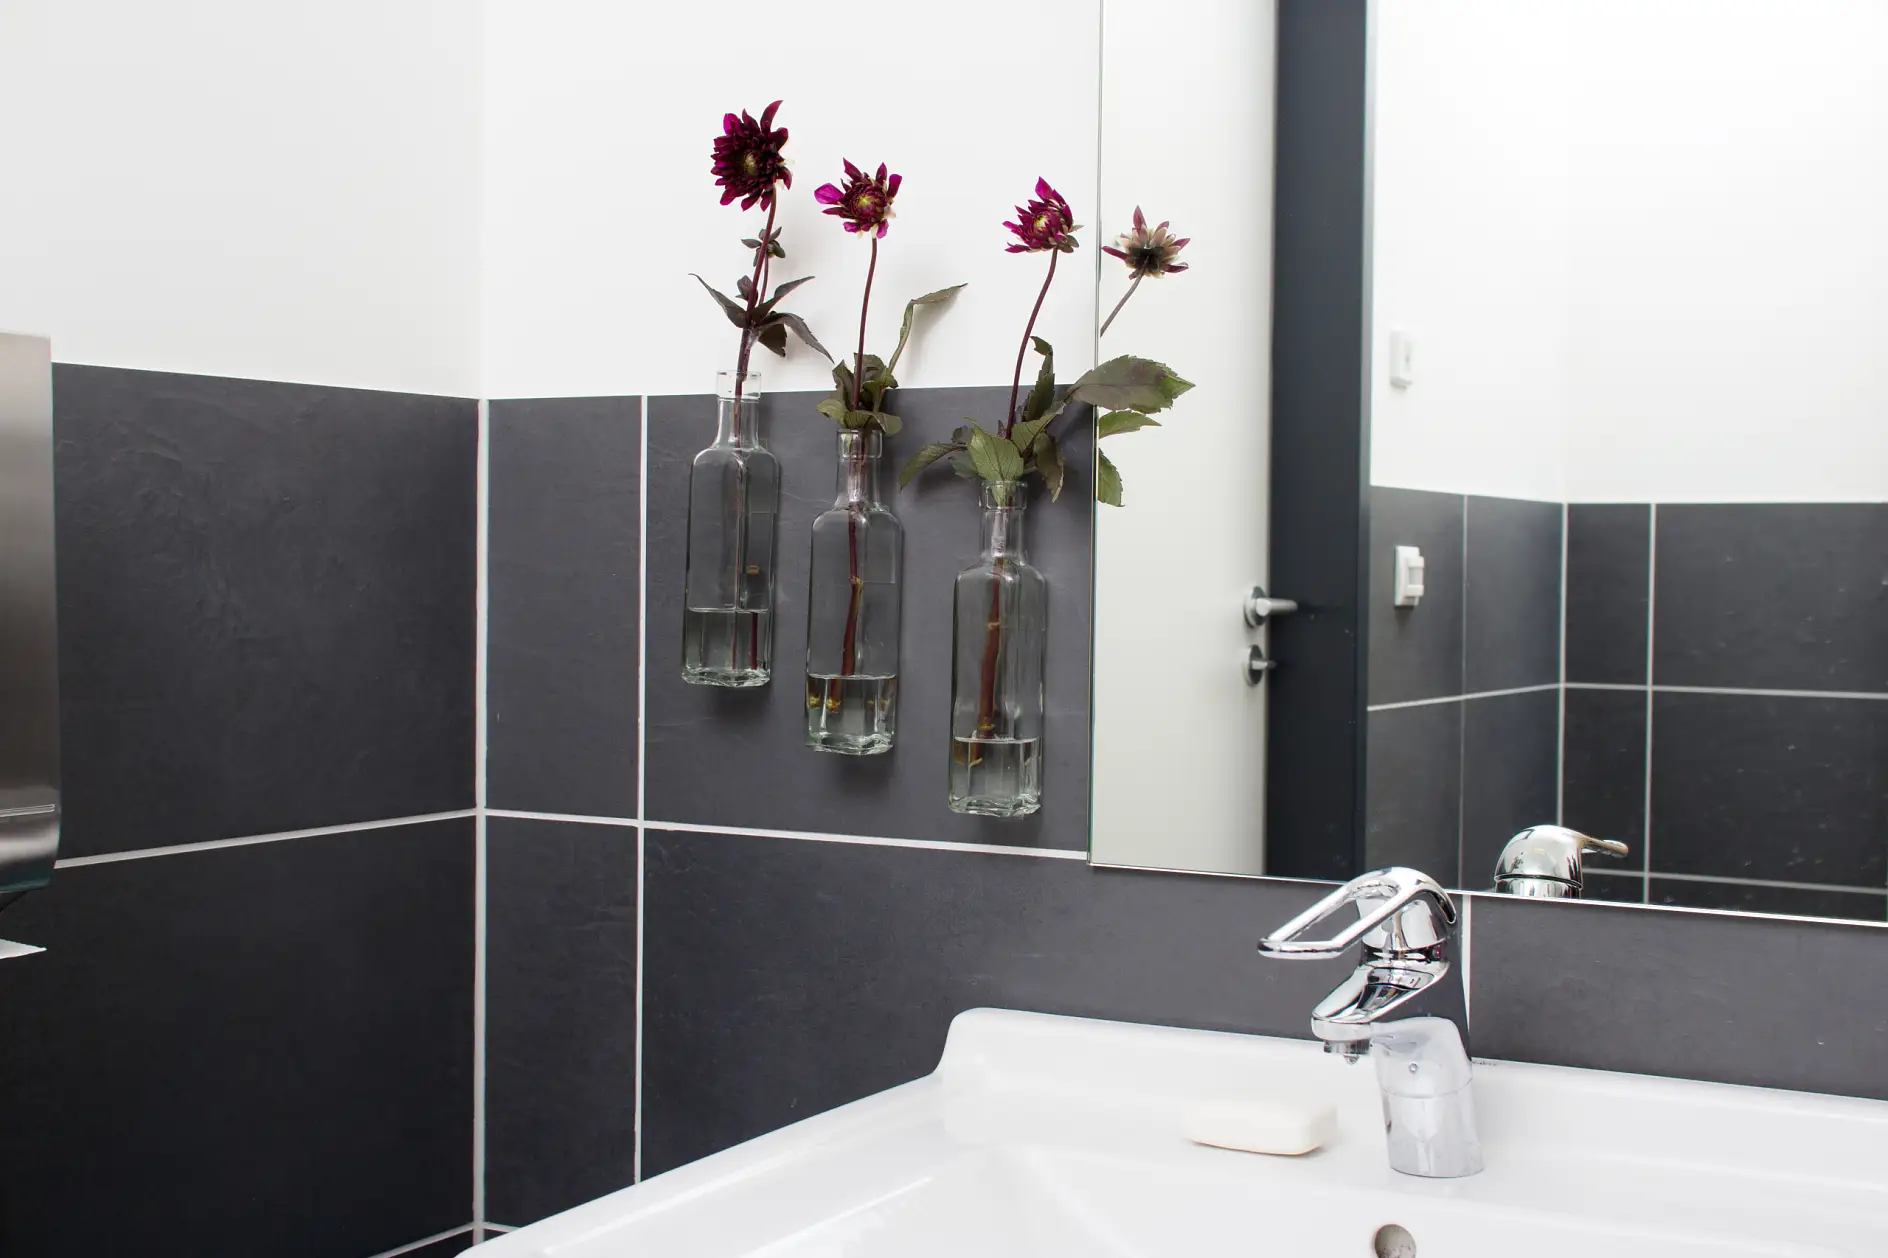 vasi di fiori in bagno fissati con tesa Powerstrips® Strips Transparent Large